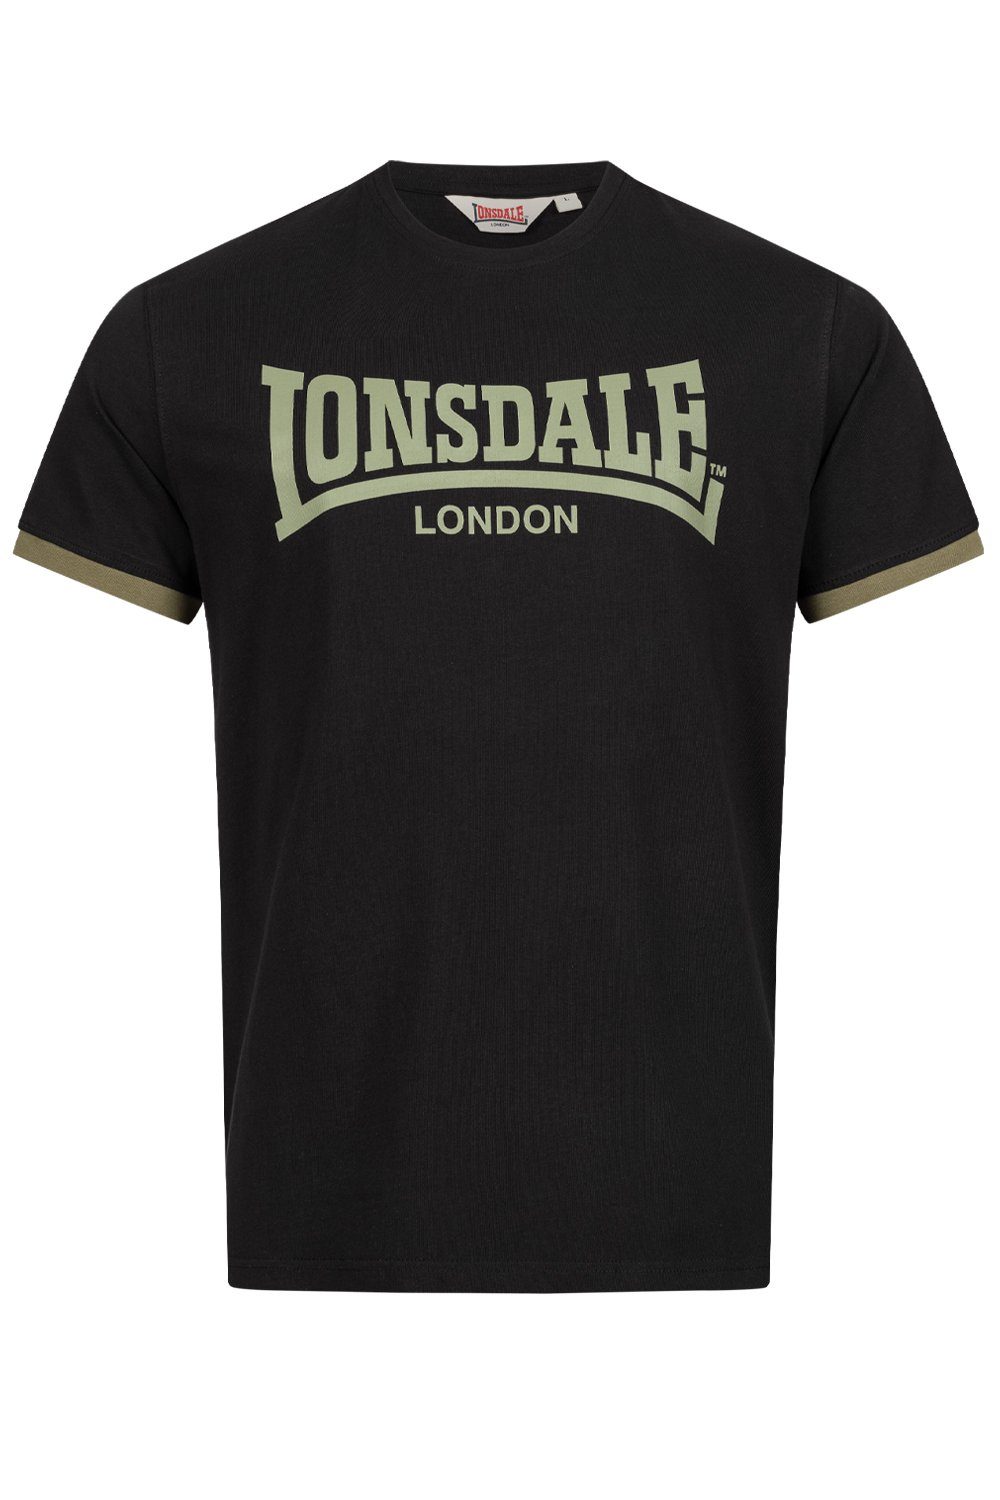 TOWNHEAD Lonsdale T-Shirt